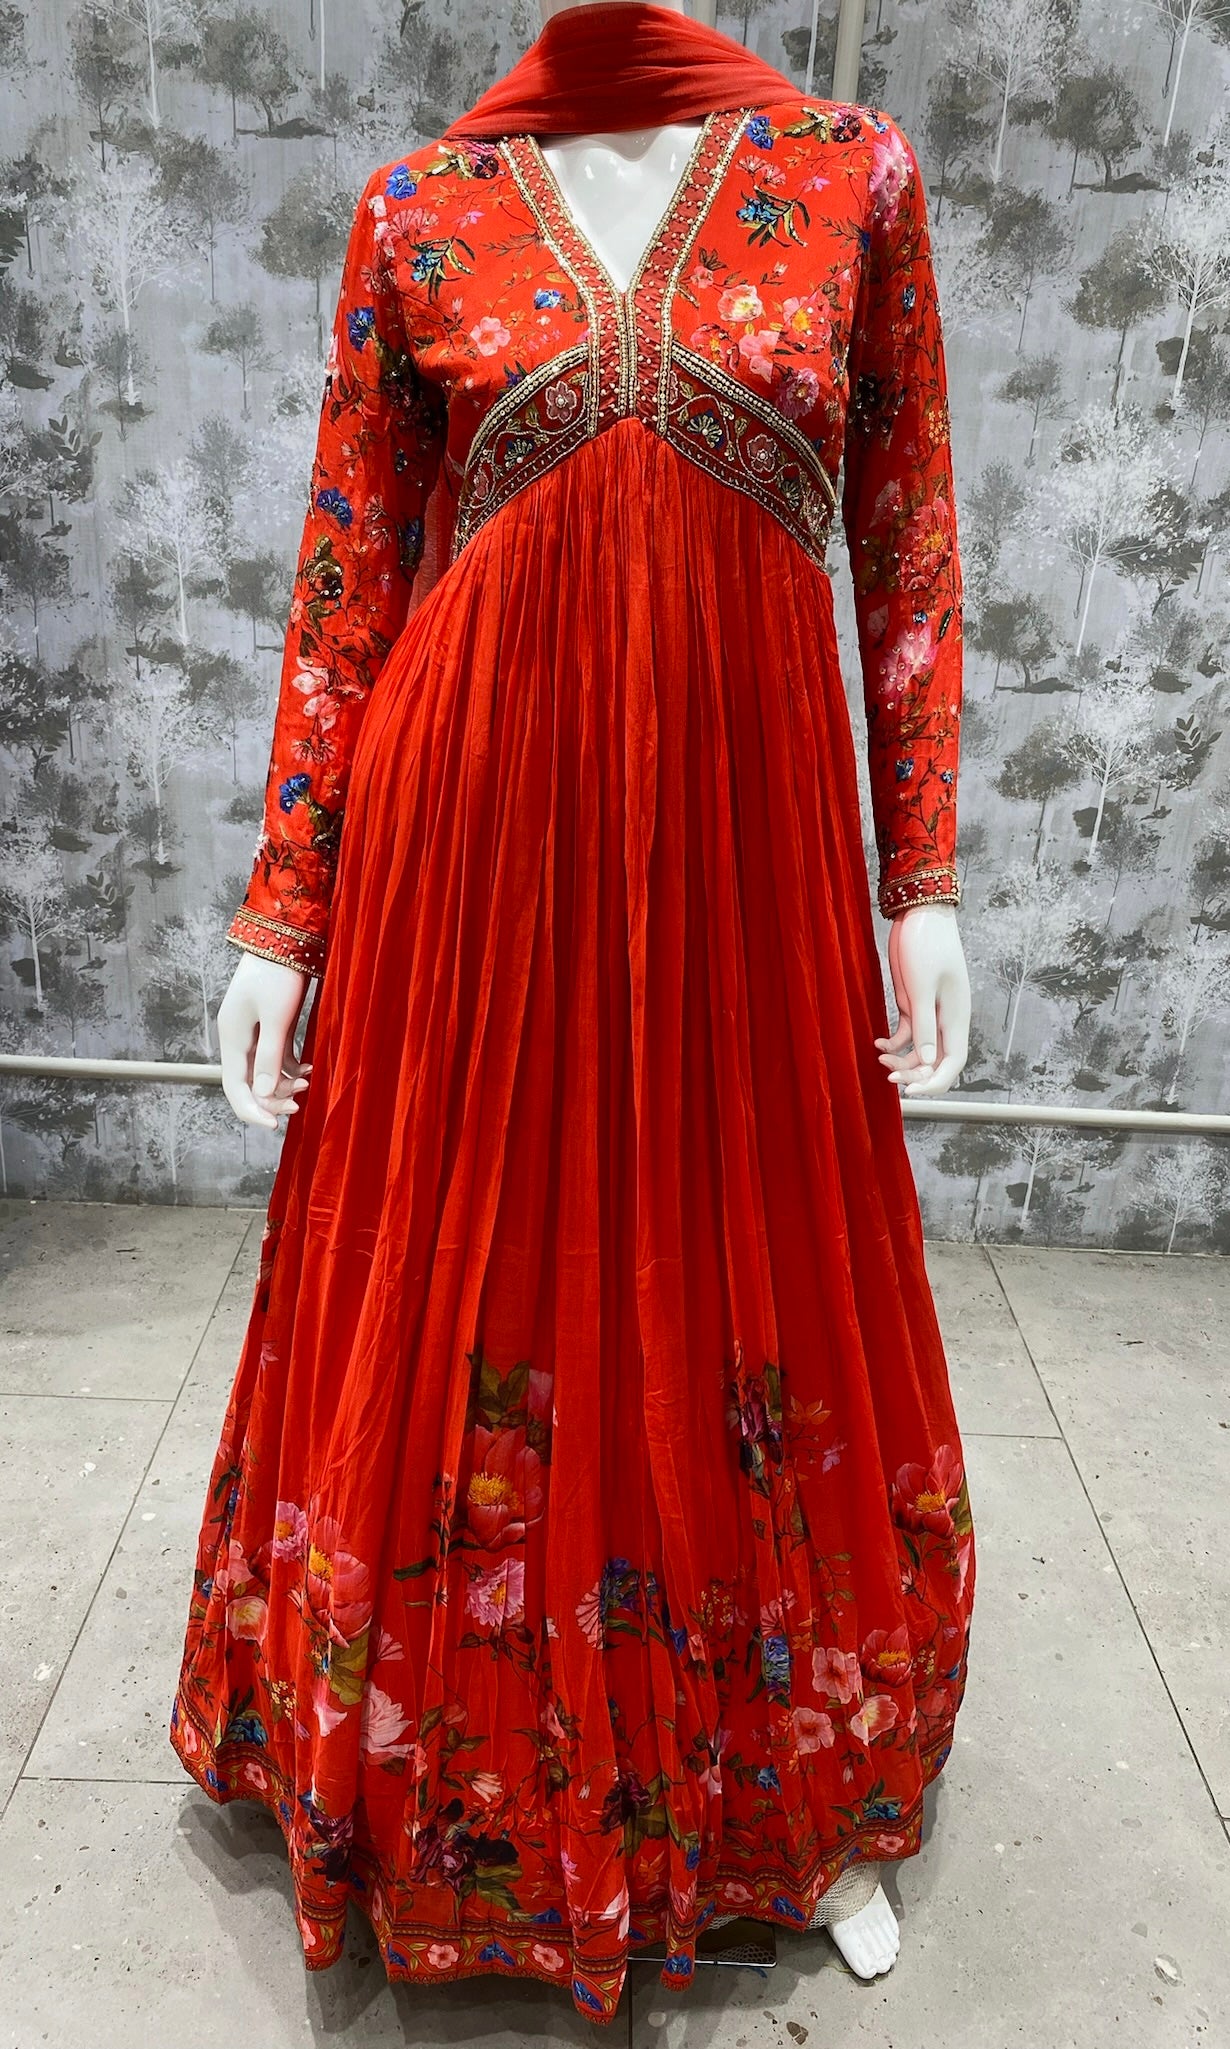 Top Alia Bhatt Dresses Worn On The Red Carpet | Filmfare.com